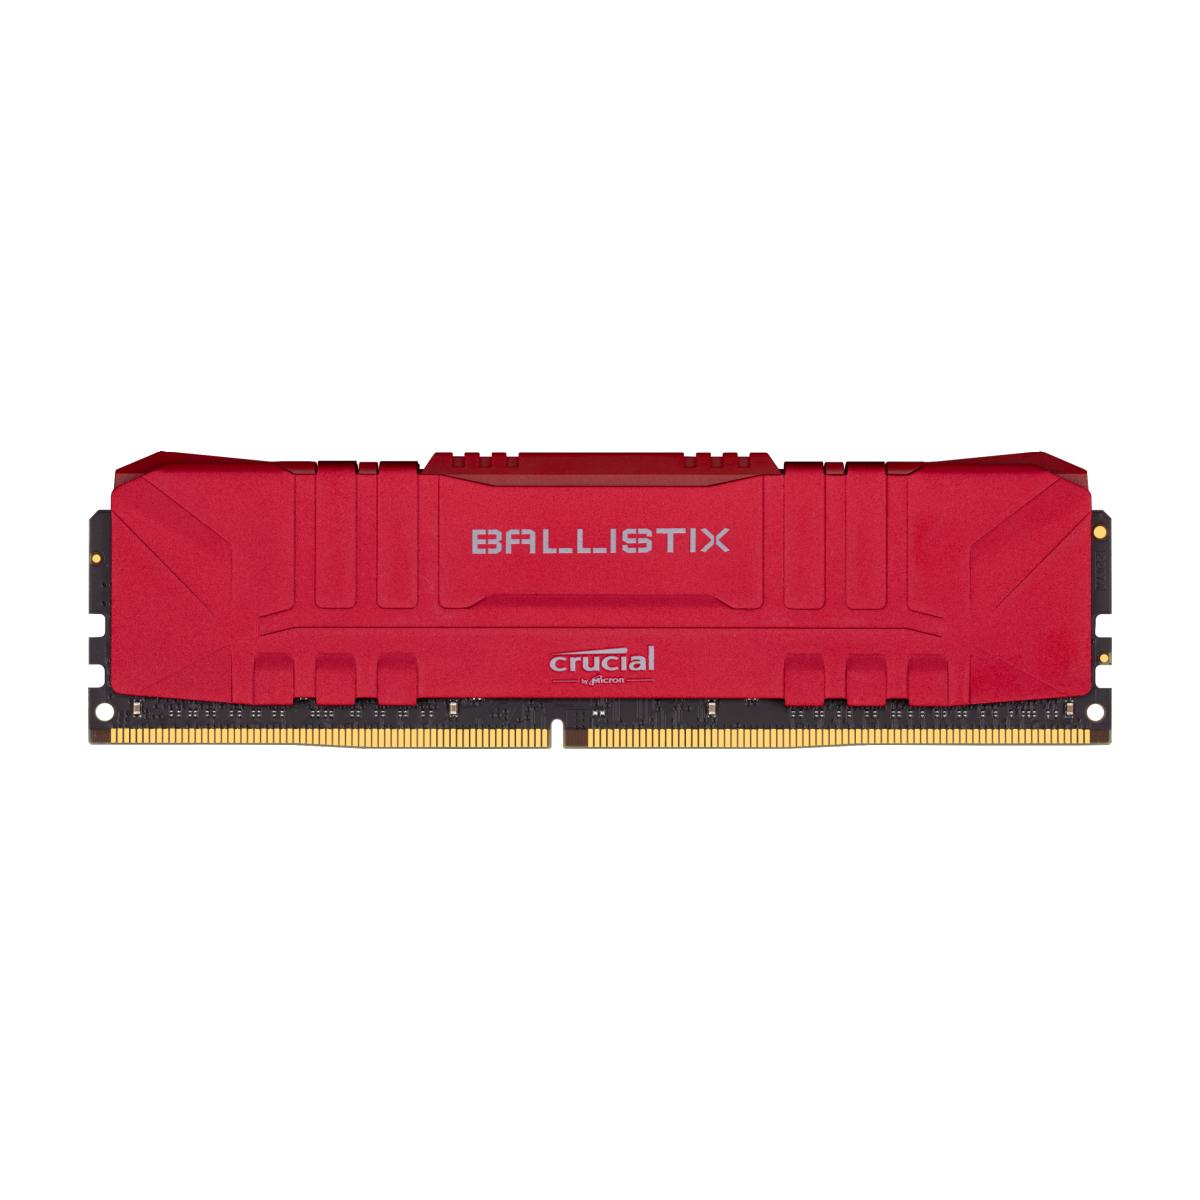 MEMORIA DIMM DDR4 CRUCIAL BALLISTIX (BL8G30C15U4R)8GB 3000MHZ, RED HEATSINK, CL15 - CRUCIAL